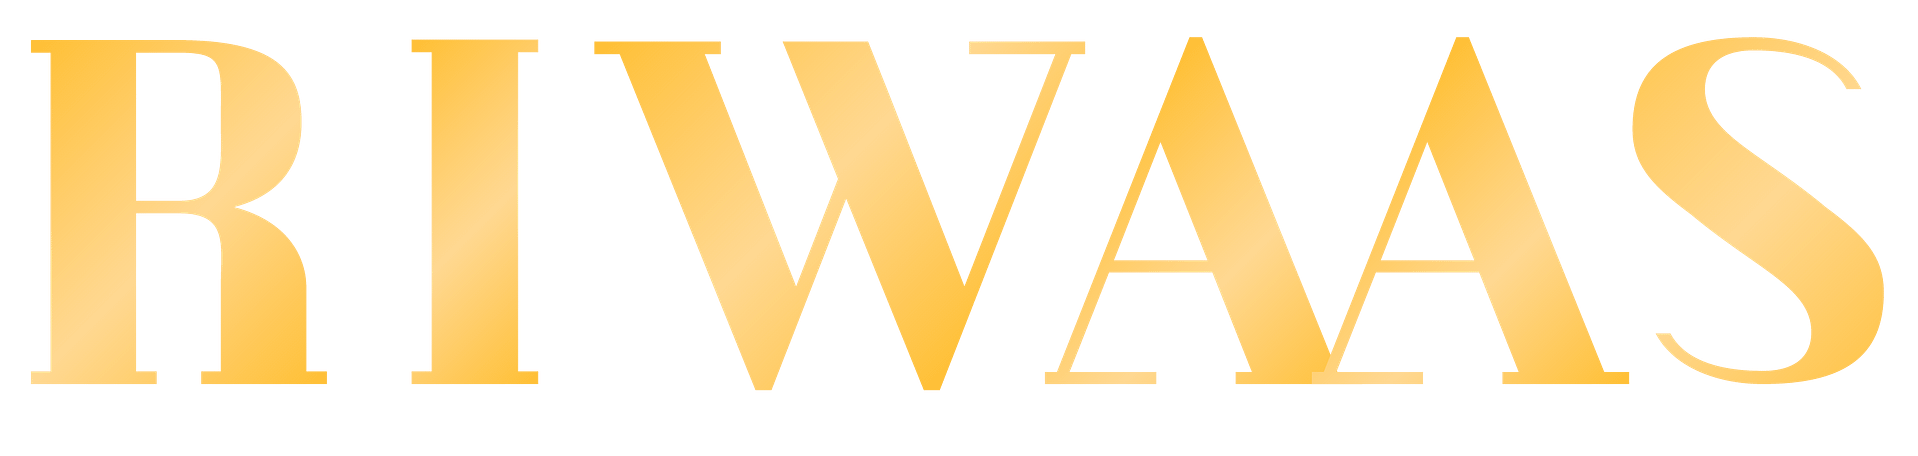 Riwaaz-logo